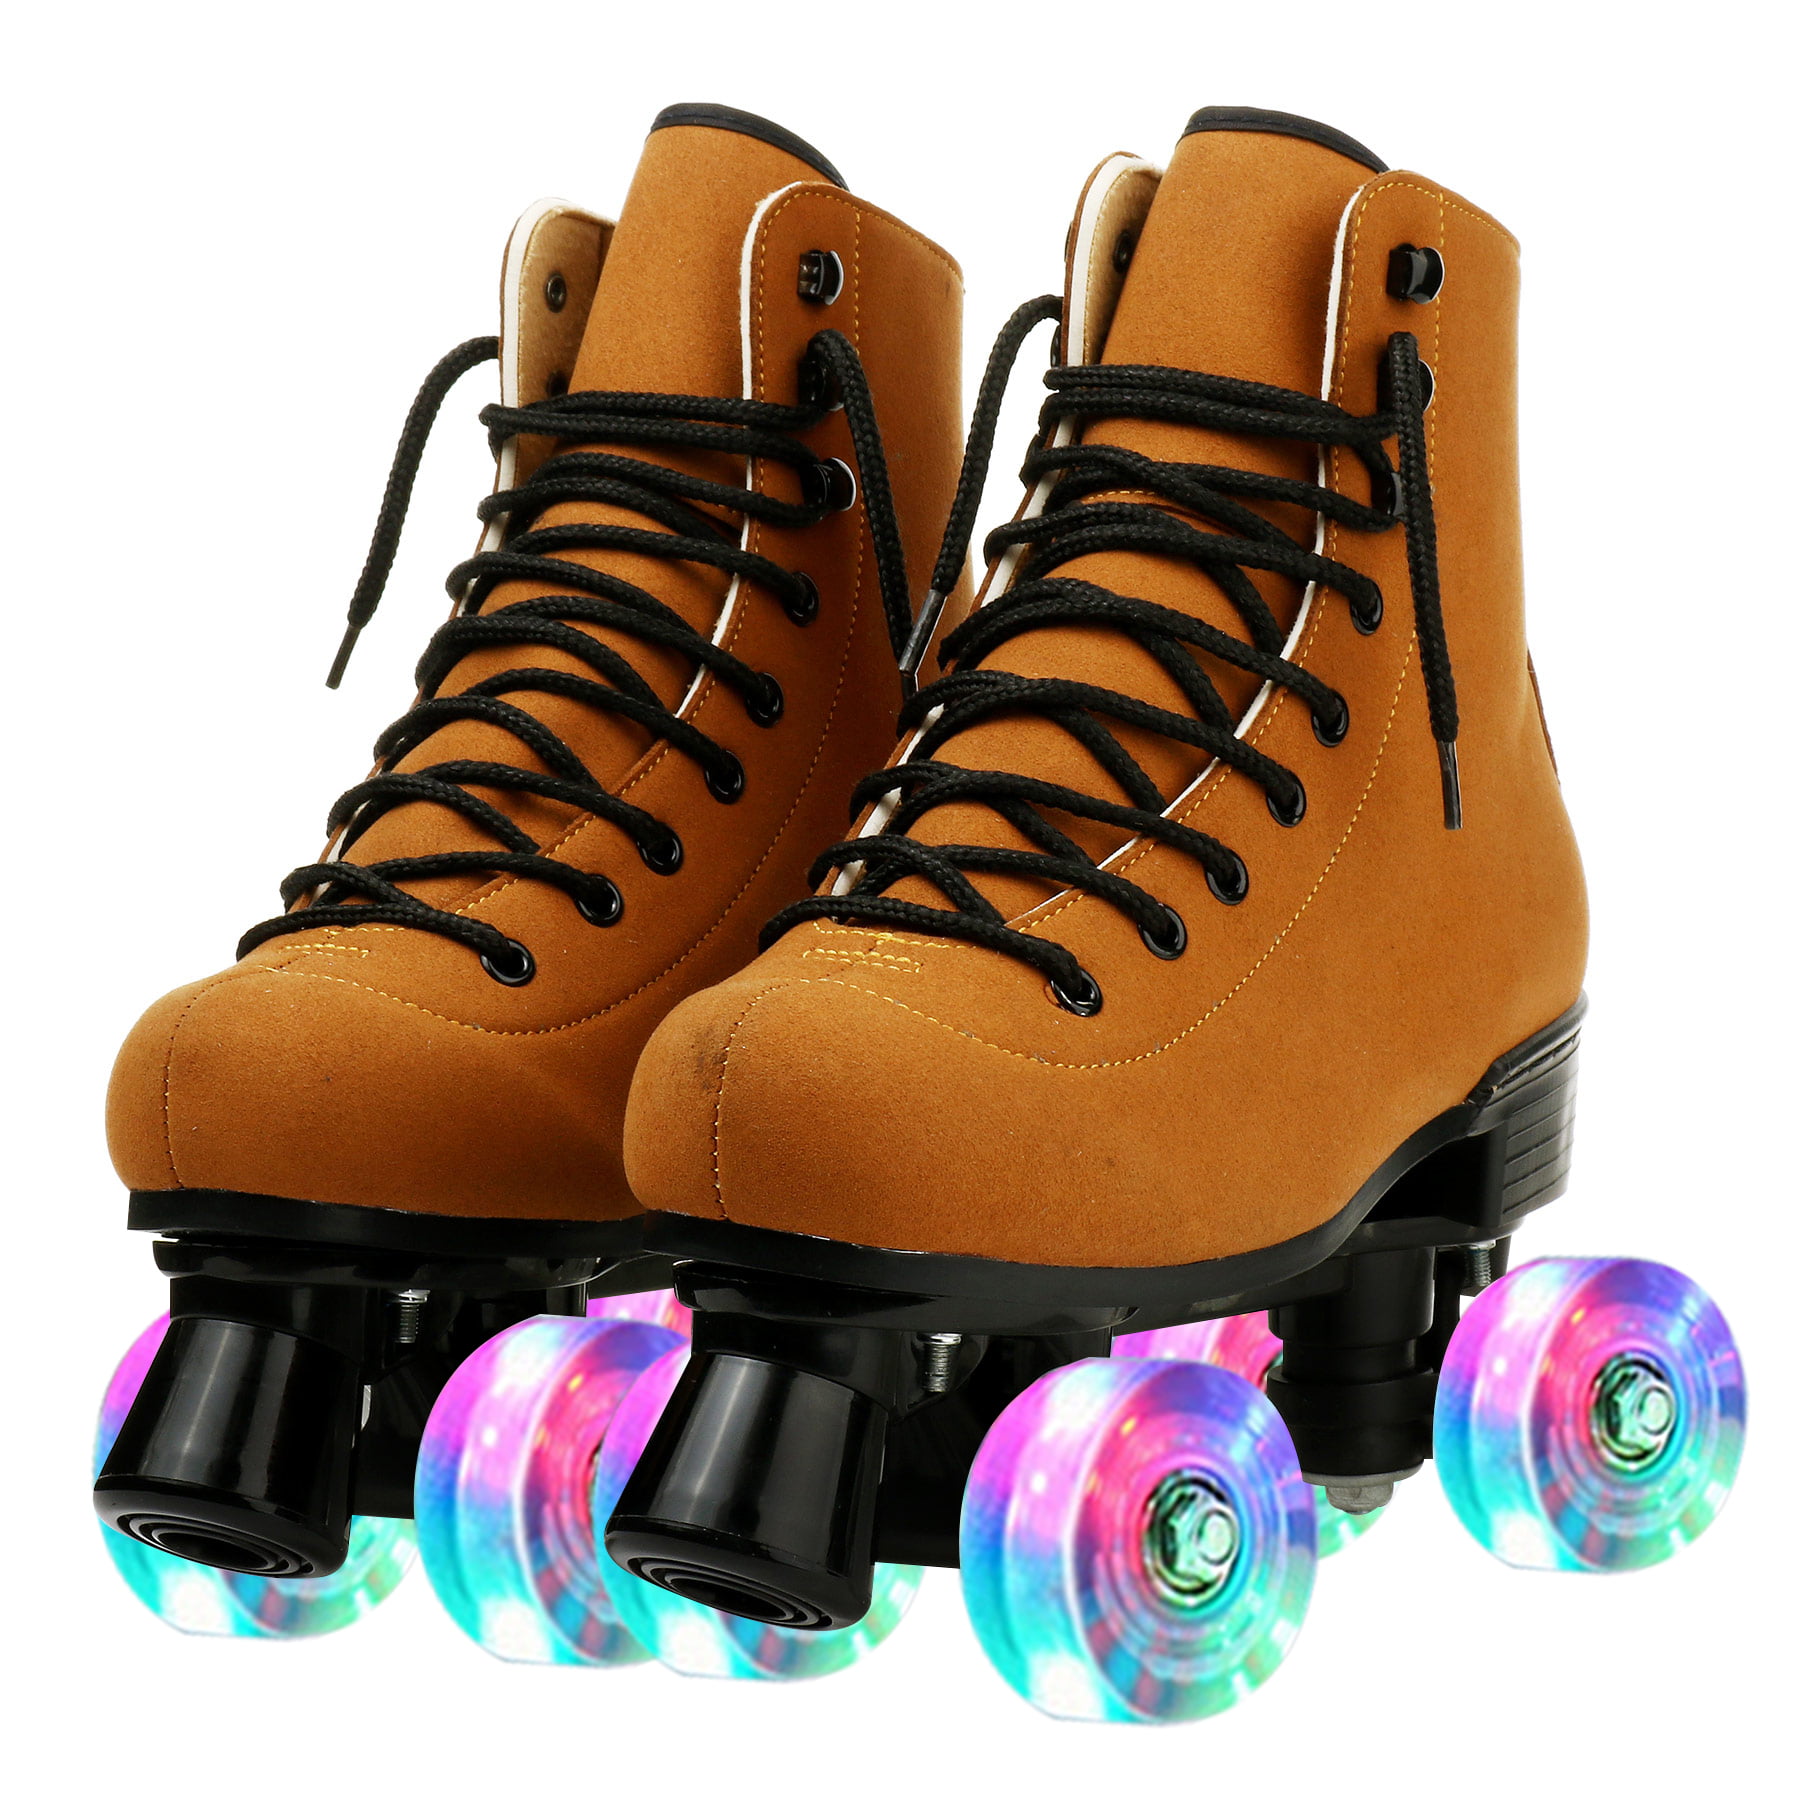 Four-Wheel Roller Skates Shiny Roller Skates for Adult,Girls Womens Roller Skates PU Leather High-top Classic Fashion Green Roller Skates